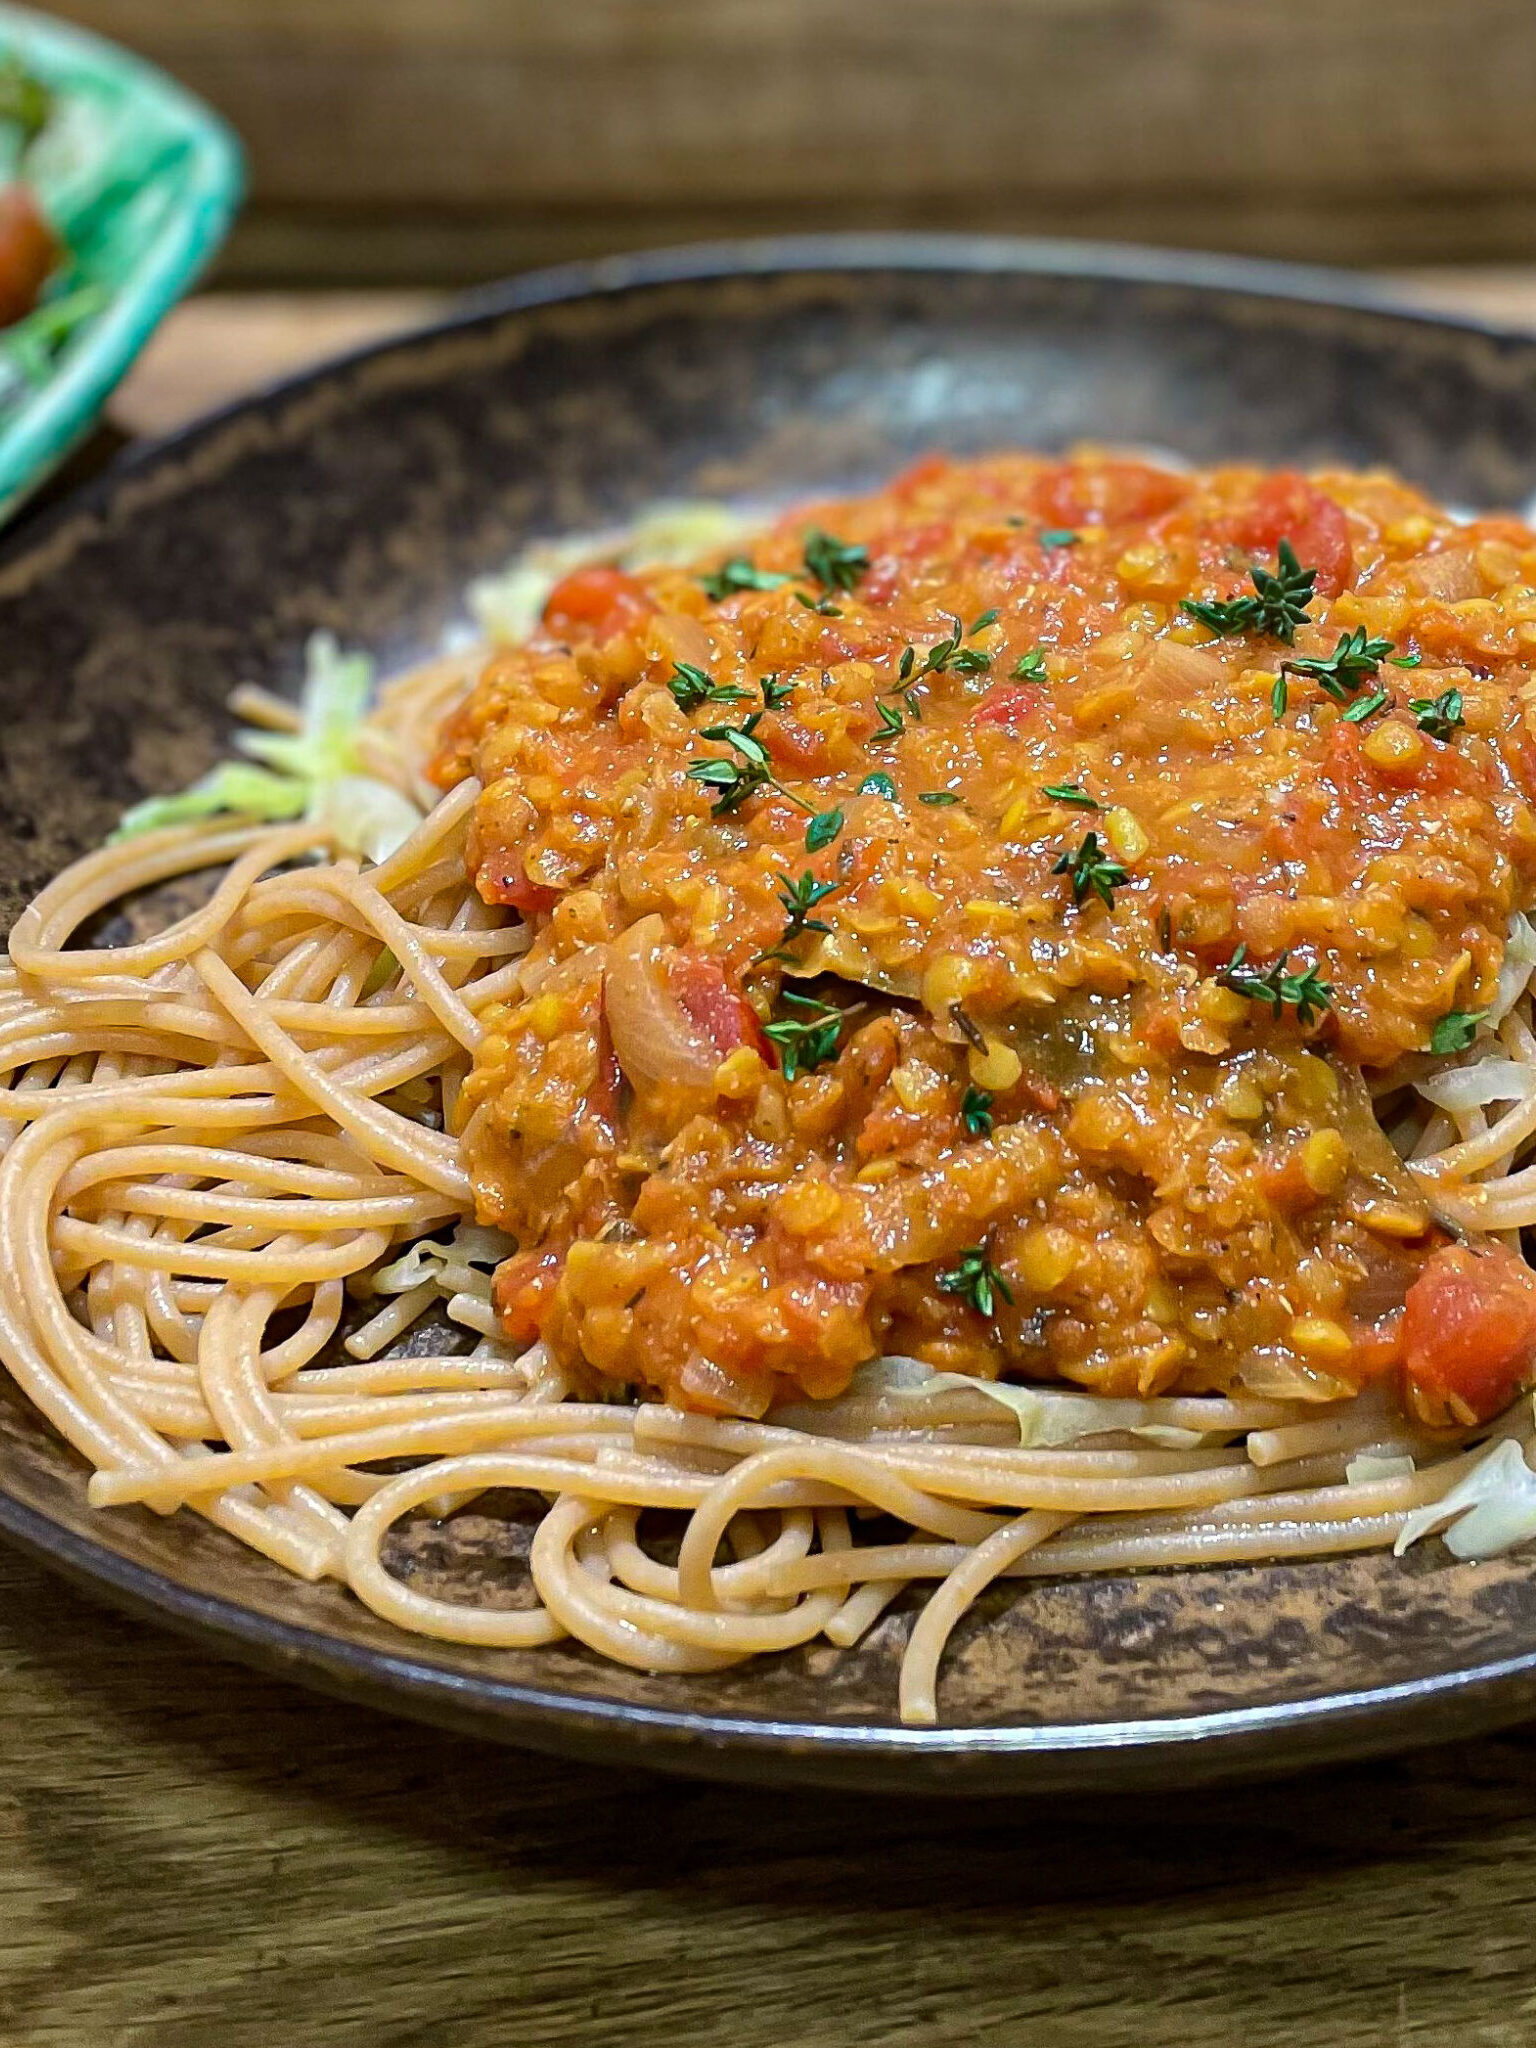 alt="red lentil Bolognese sauce over whole wheat spaghetti."